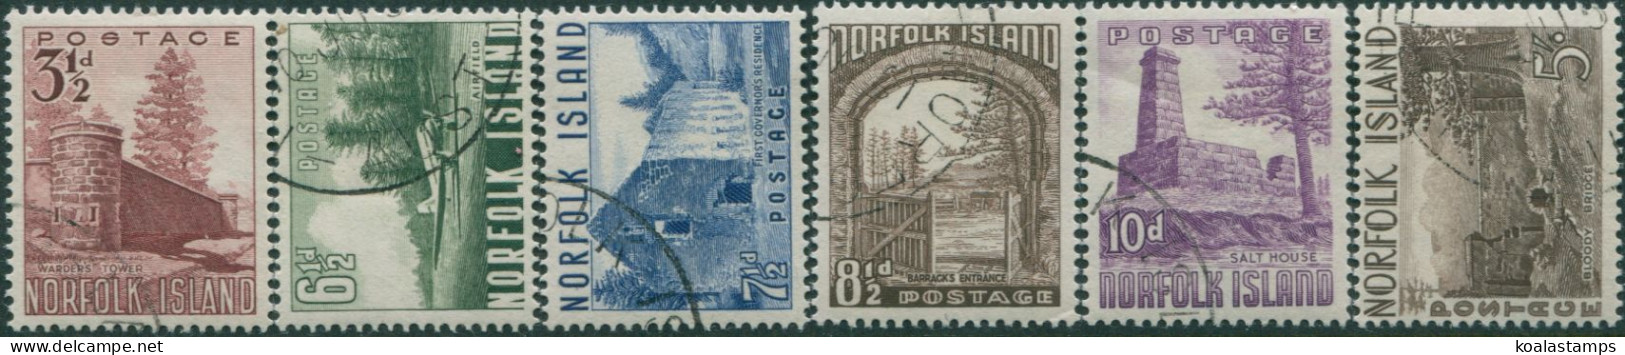 Norfolk Island 1953 SG13-18 Definitives Set FU - Norfolk Island